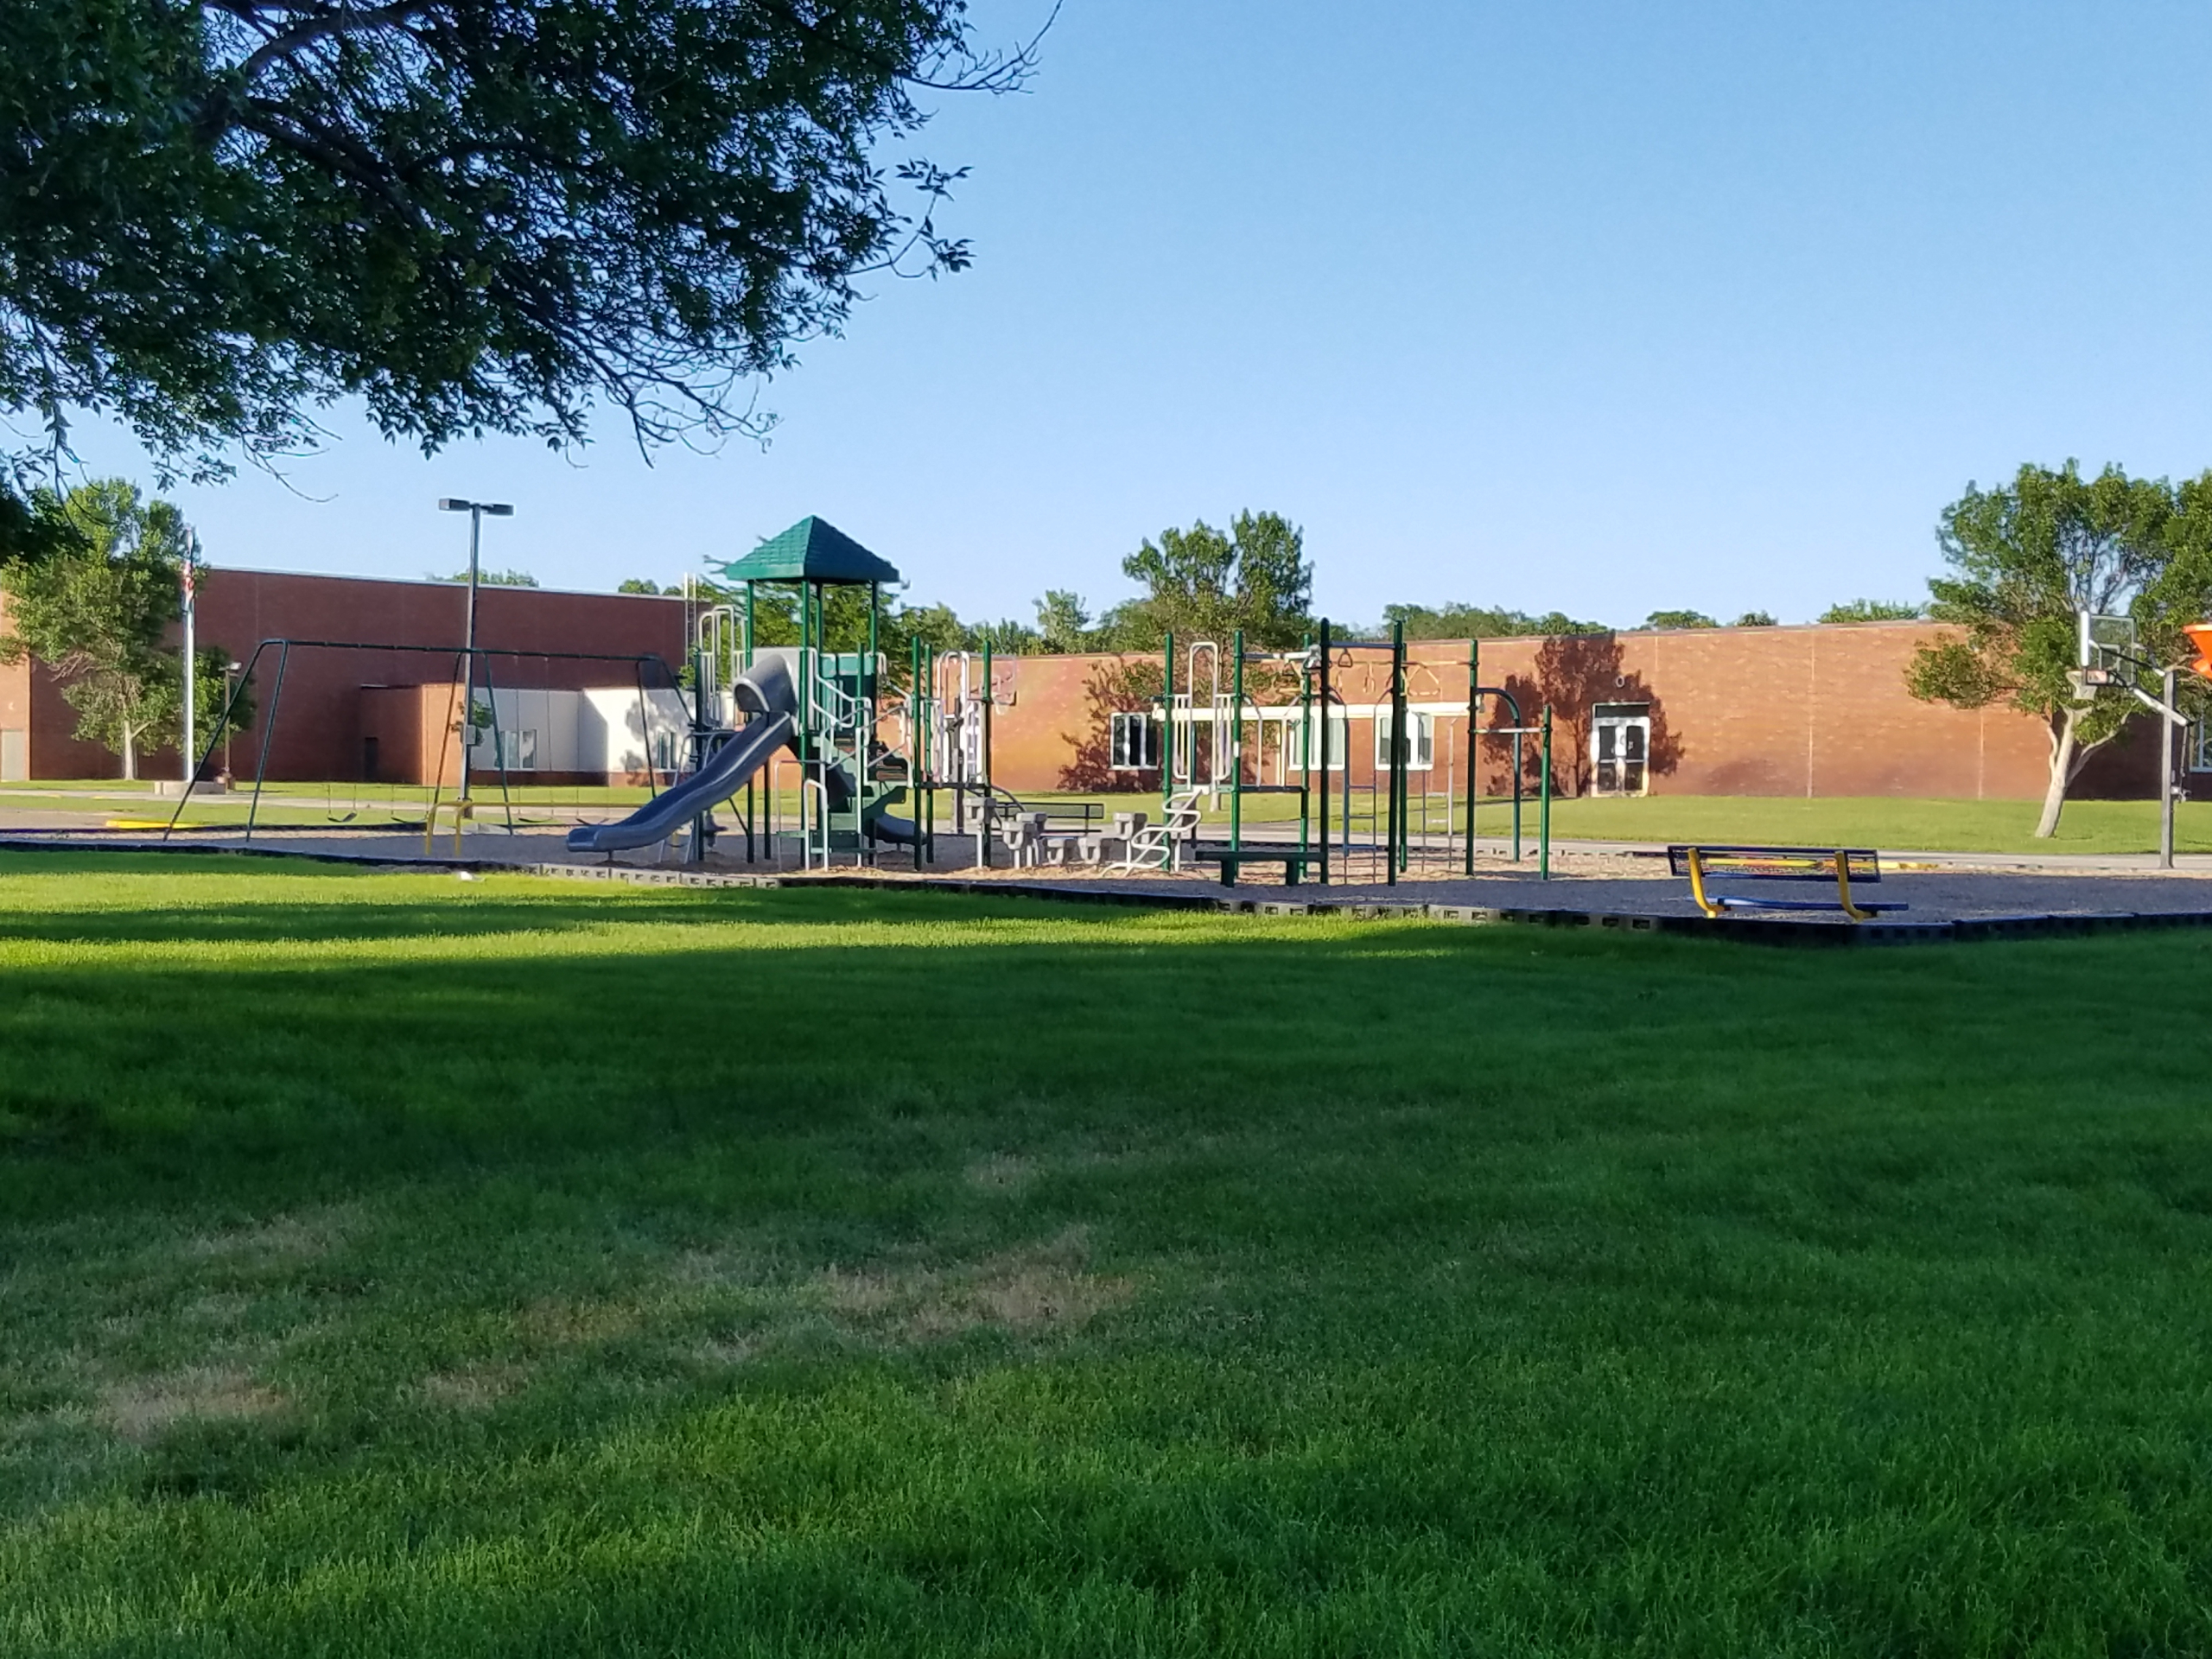 Pierre School District Playgrounds Get Passing Grade In Report To School Board